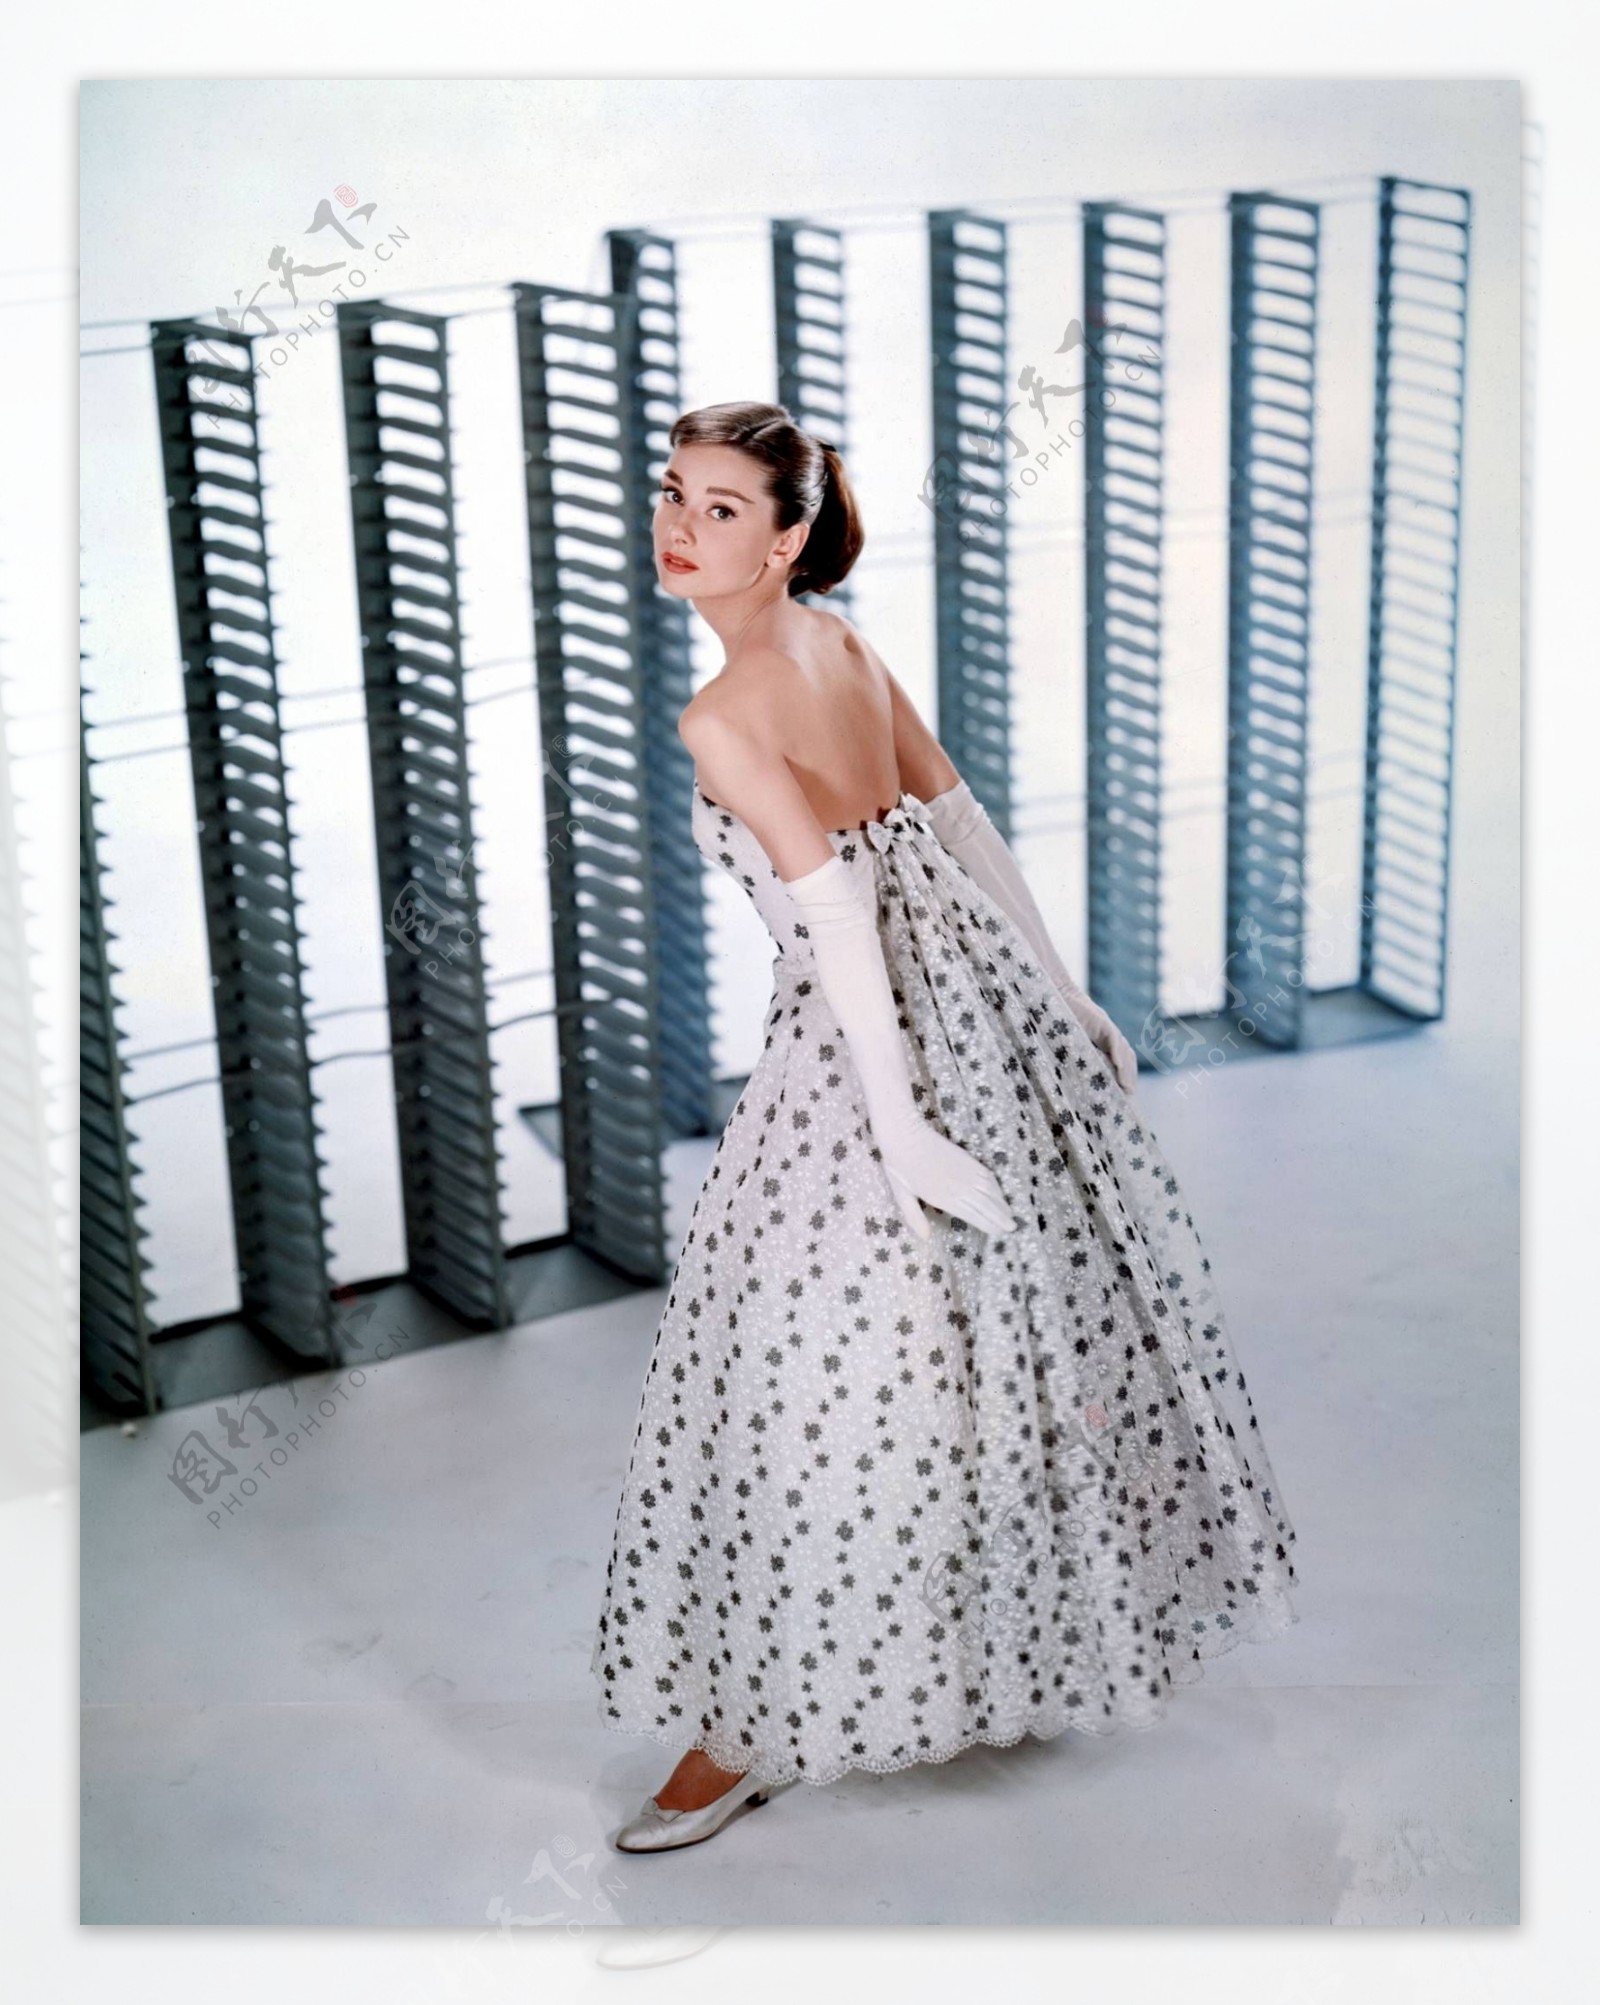 Audrey Hepburn - Classic Movies Photo (6558962) - Fanpop